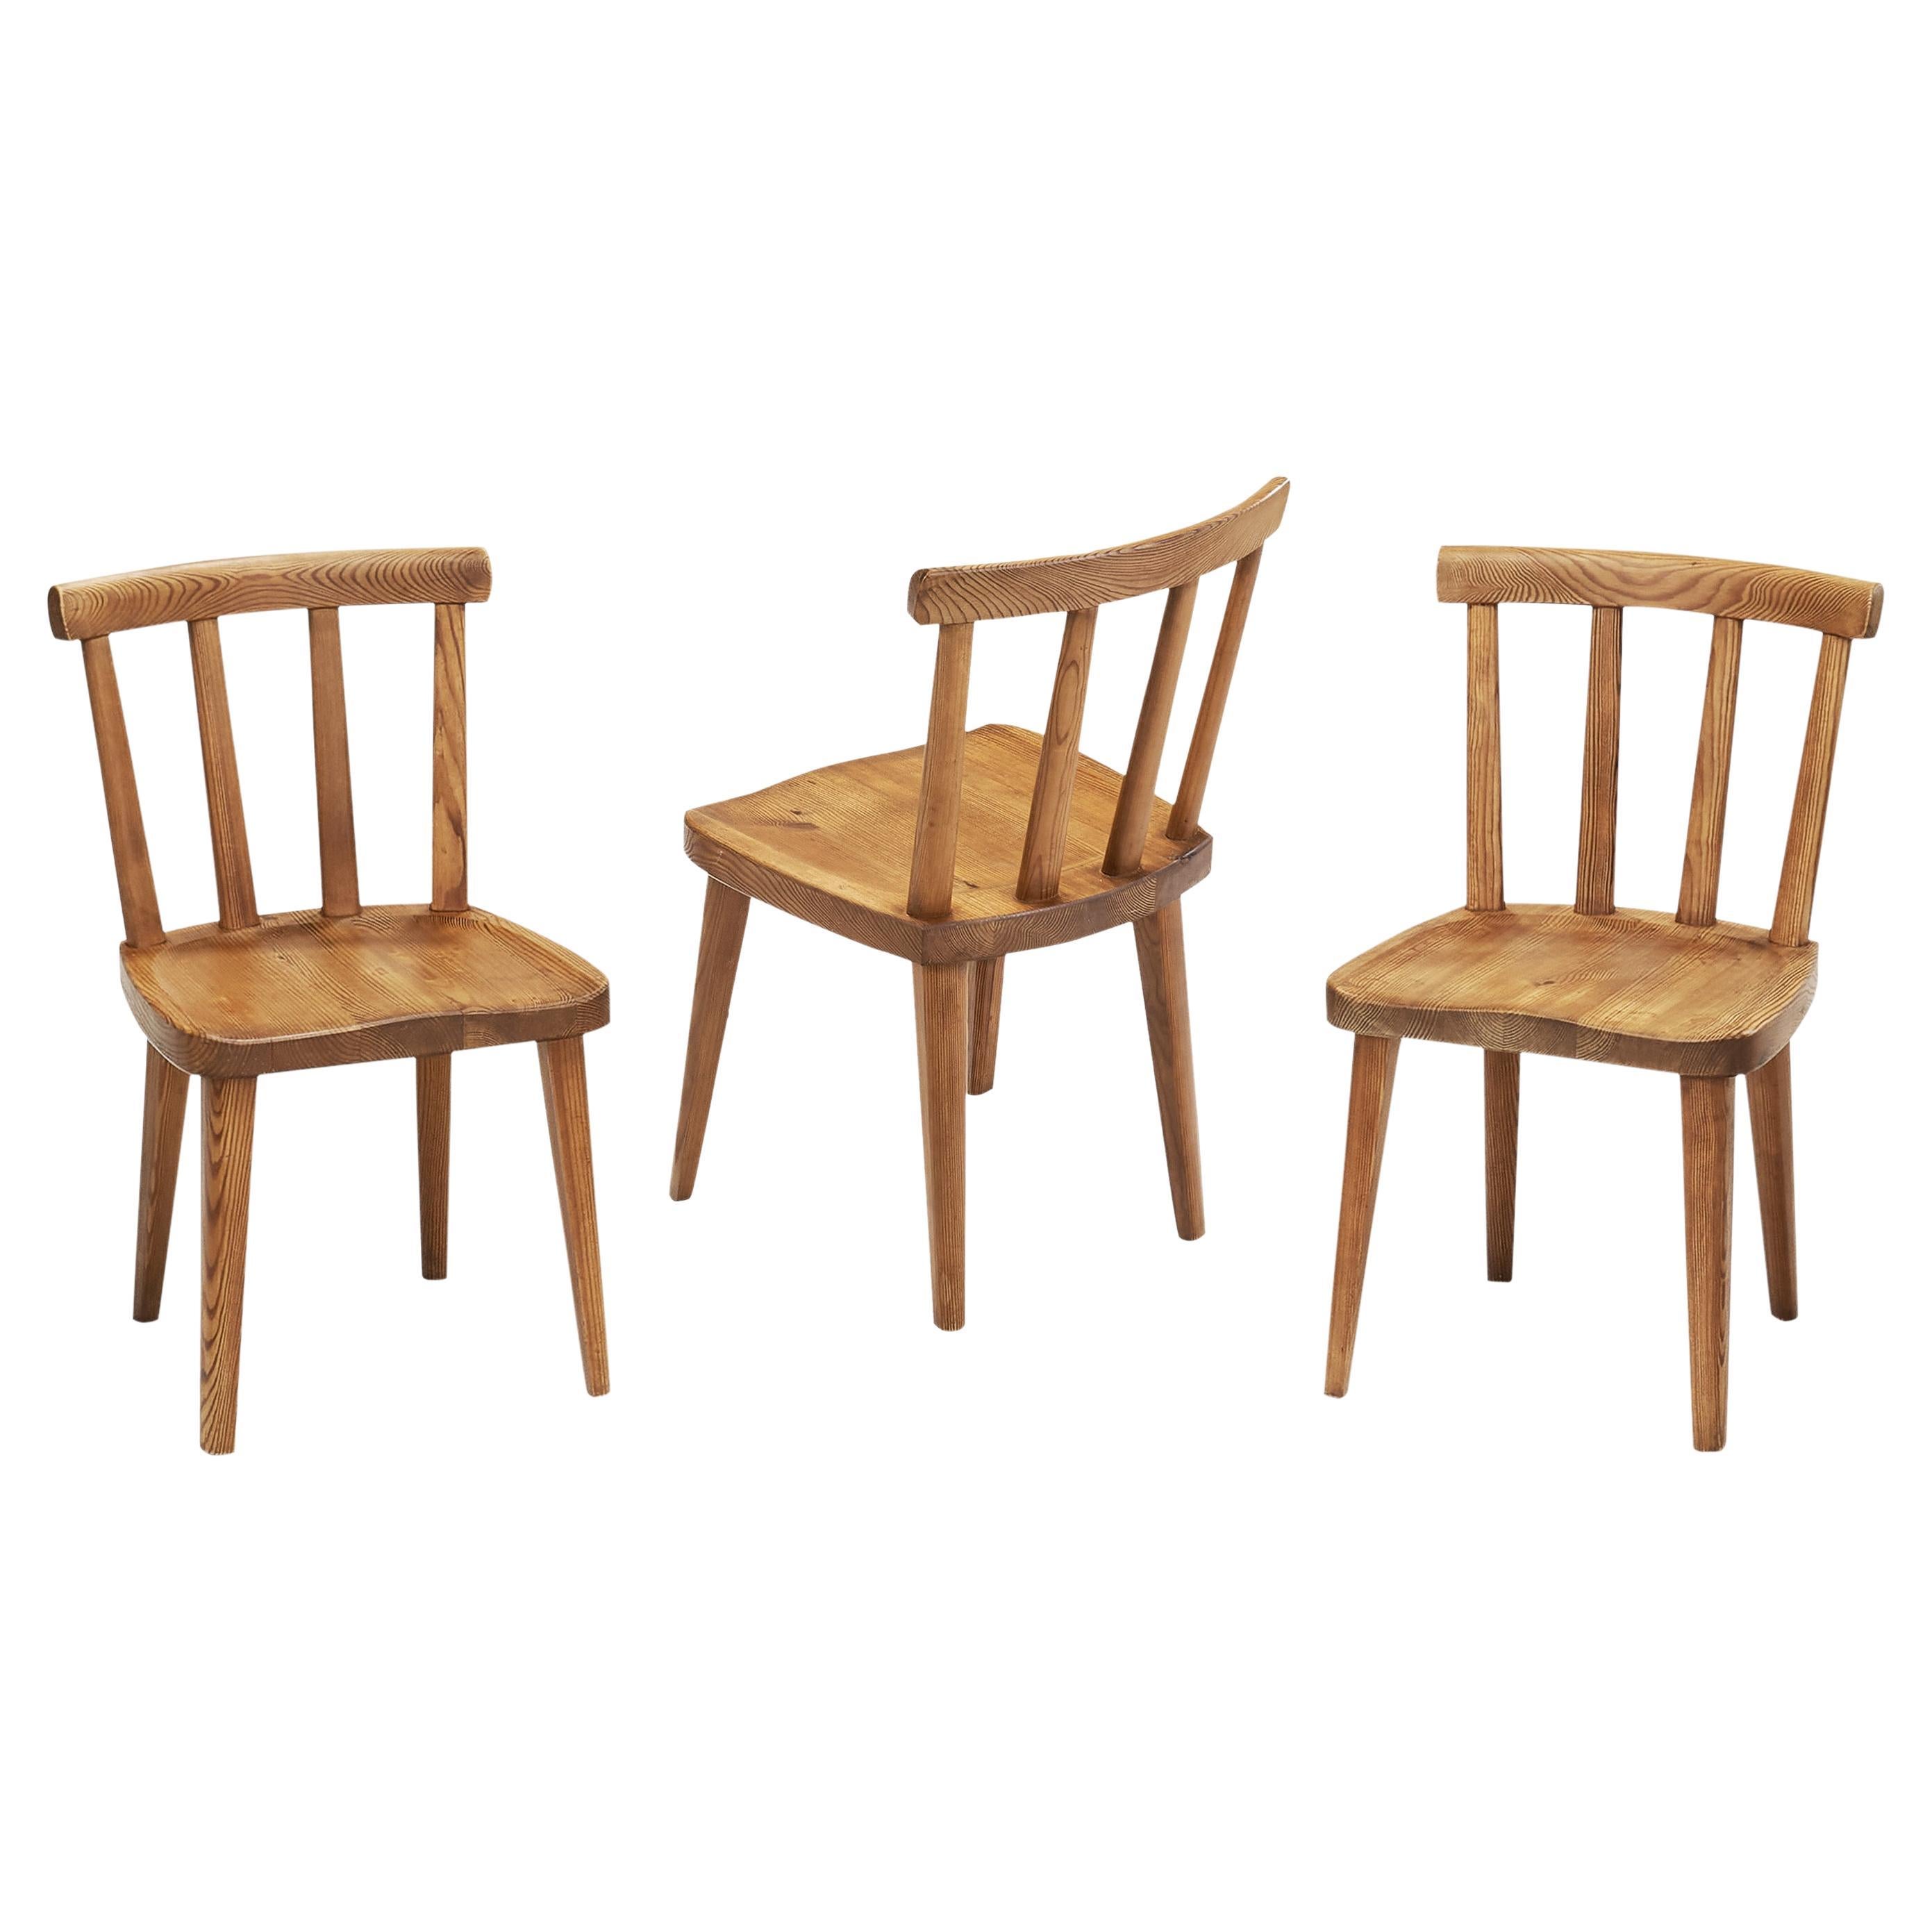 Set of 3 "Utö" Chairs by Axel Einar Hjorth for Nordiska Kompaniet, Sweden 1930s